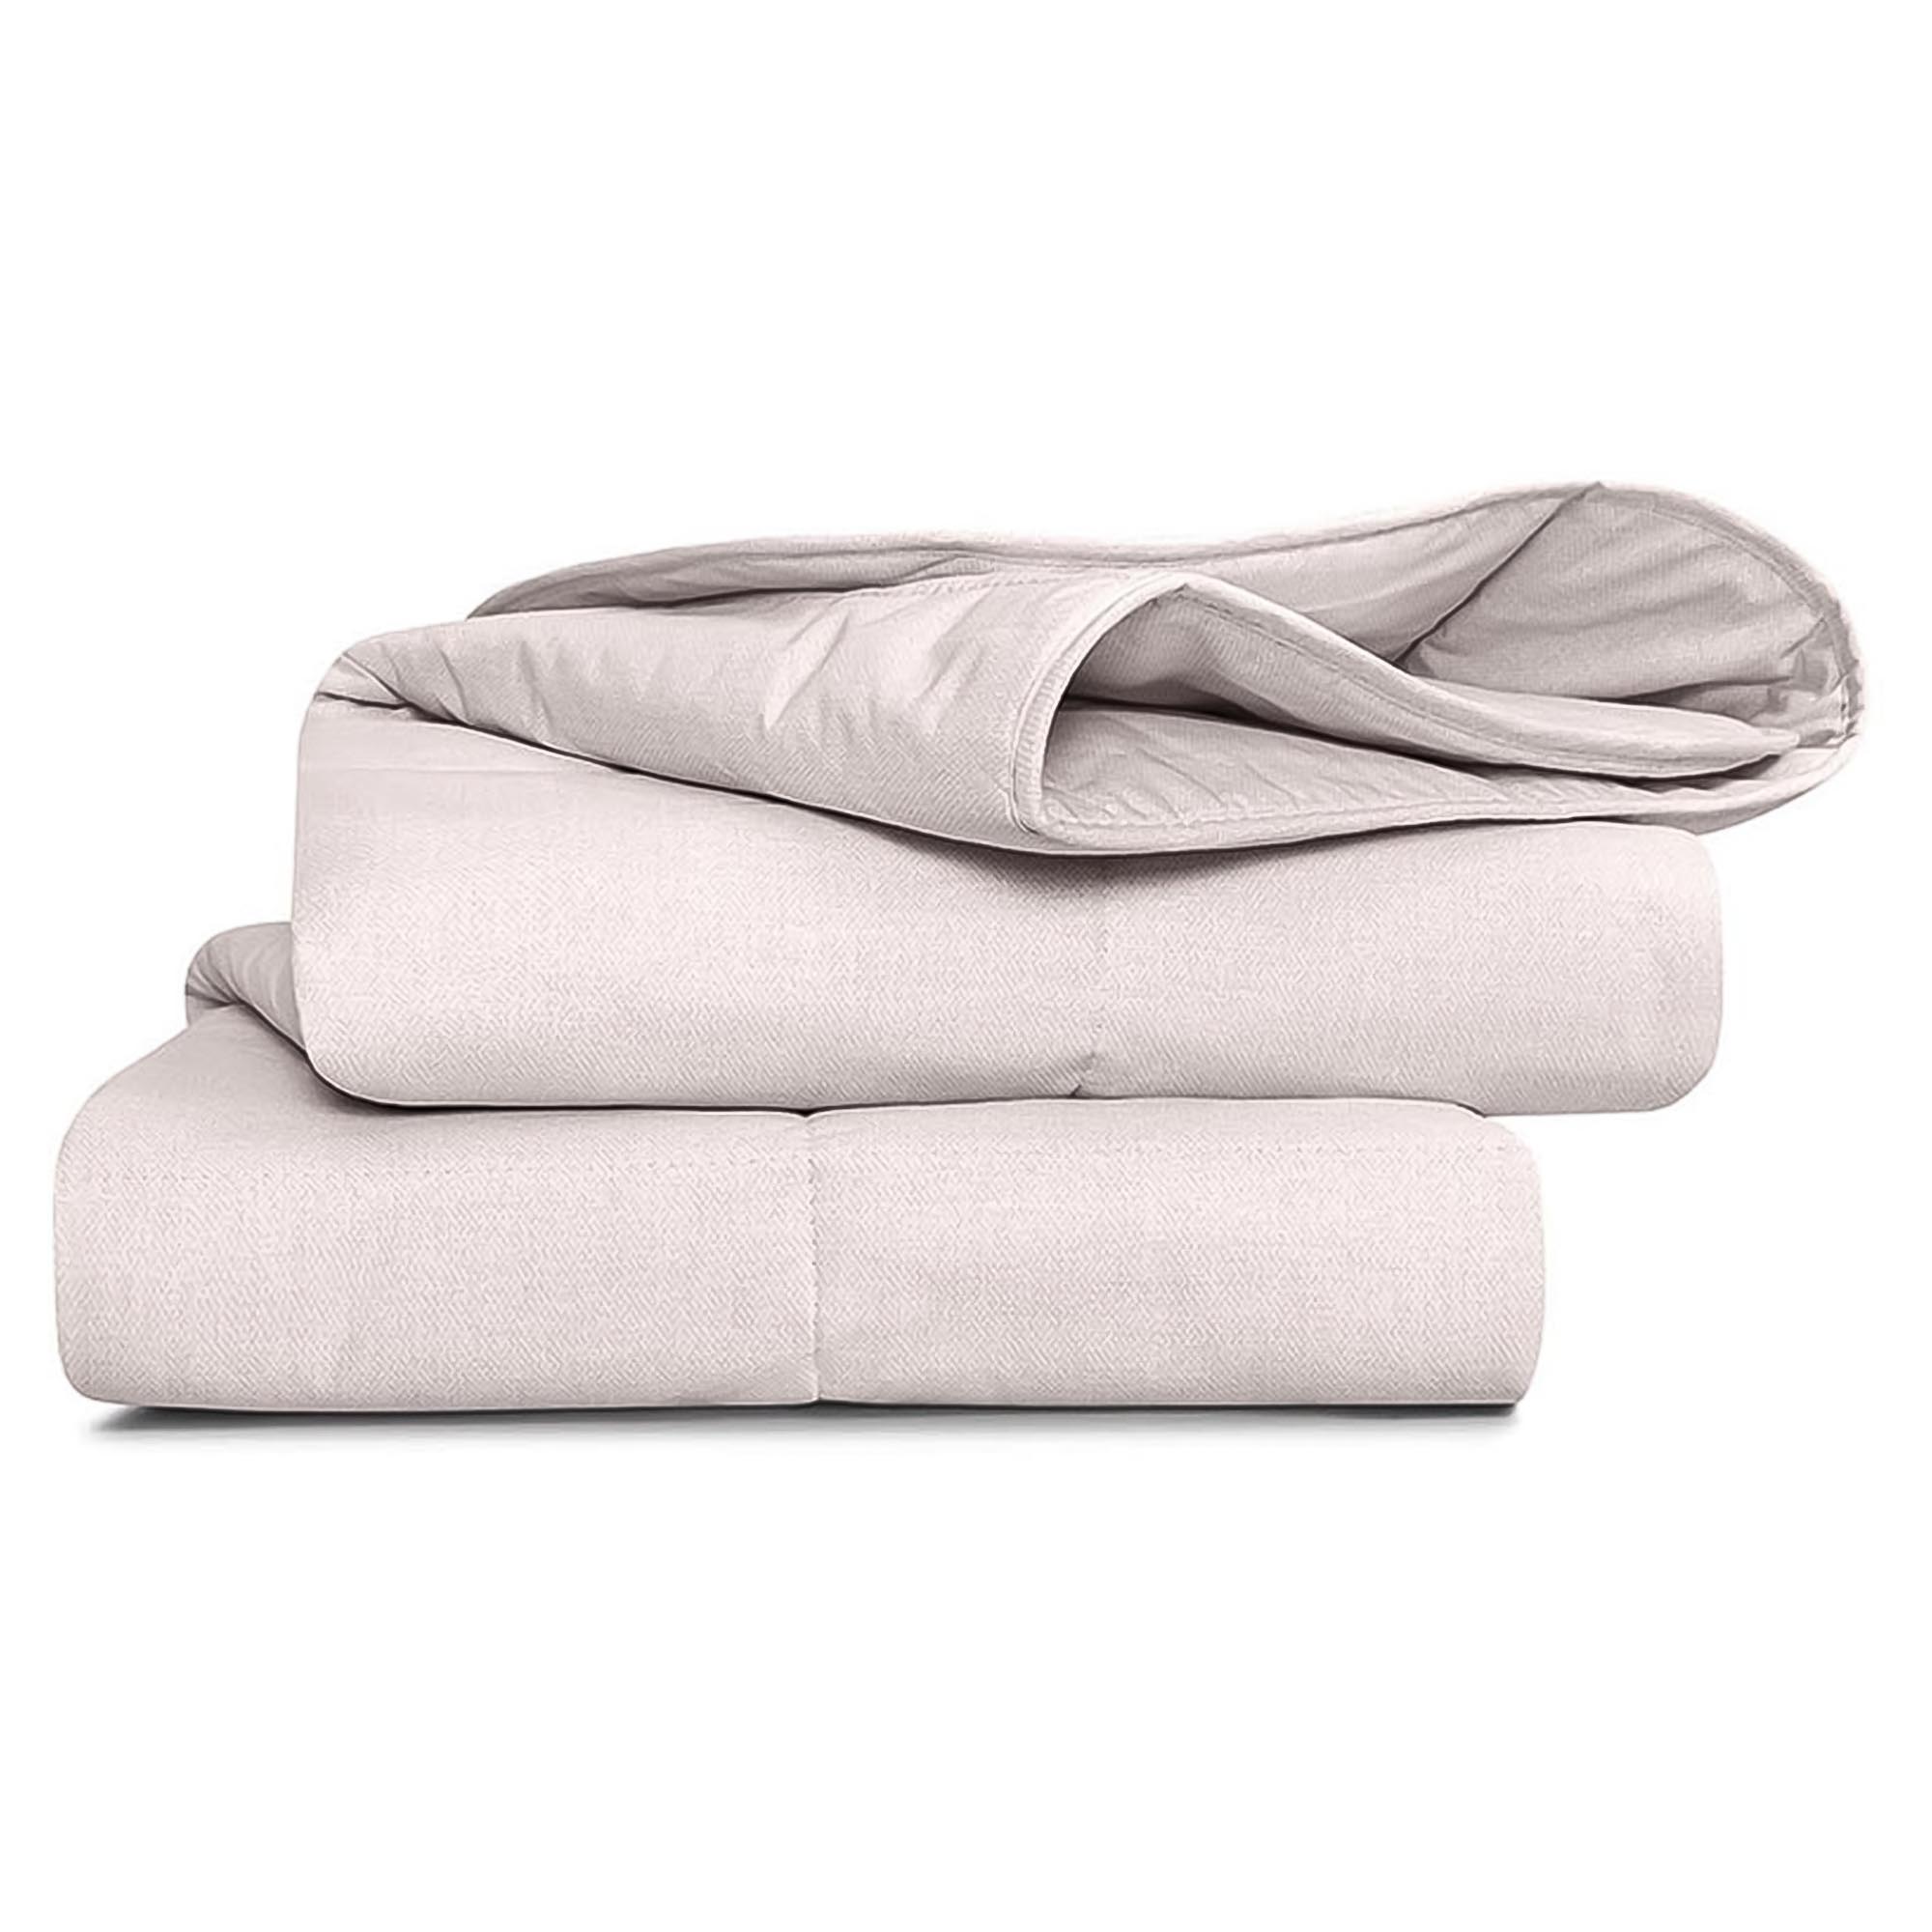 Одеяло Medsleep Sonora белое 140х200 см одеяло зимнее medsleep swan princess белое 200х210 см